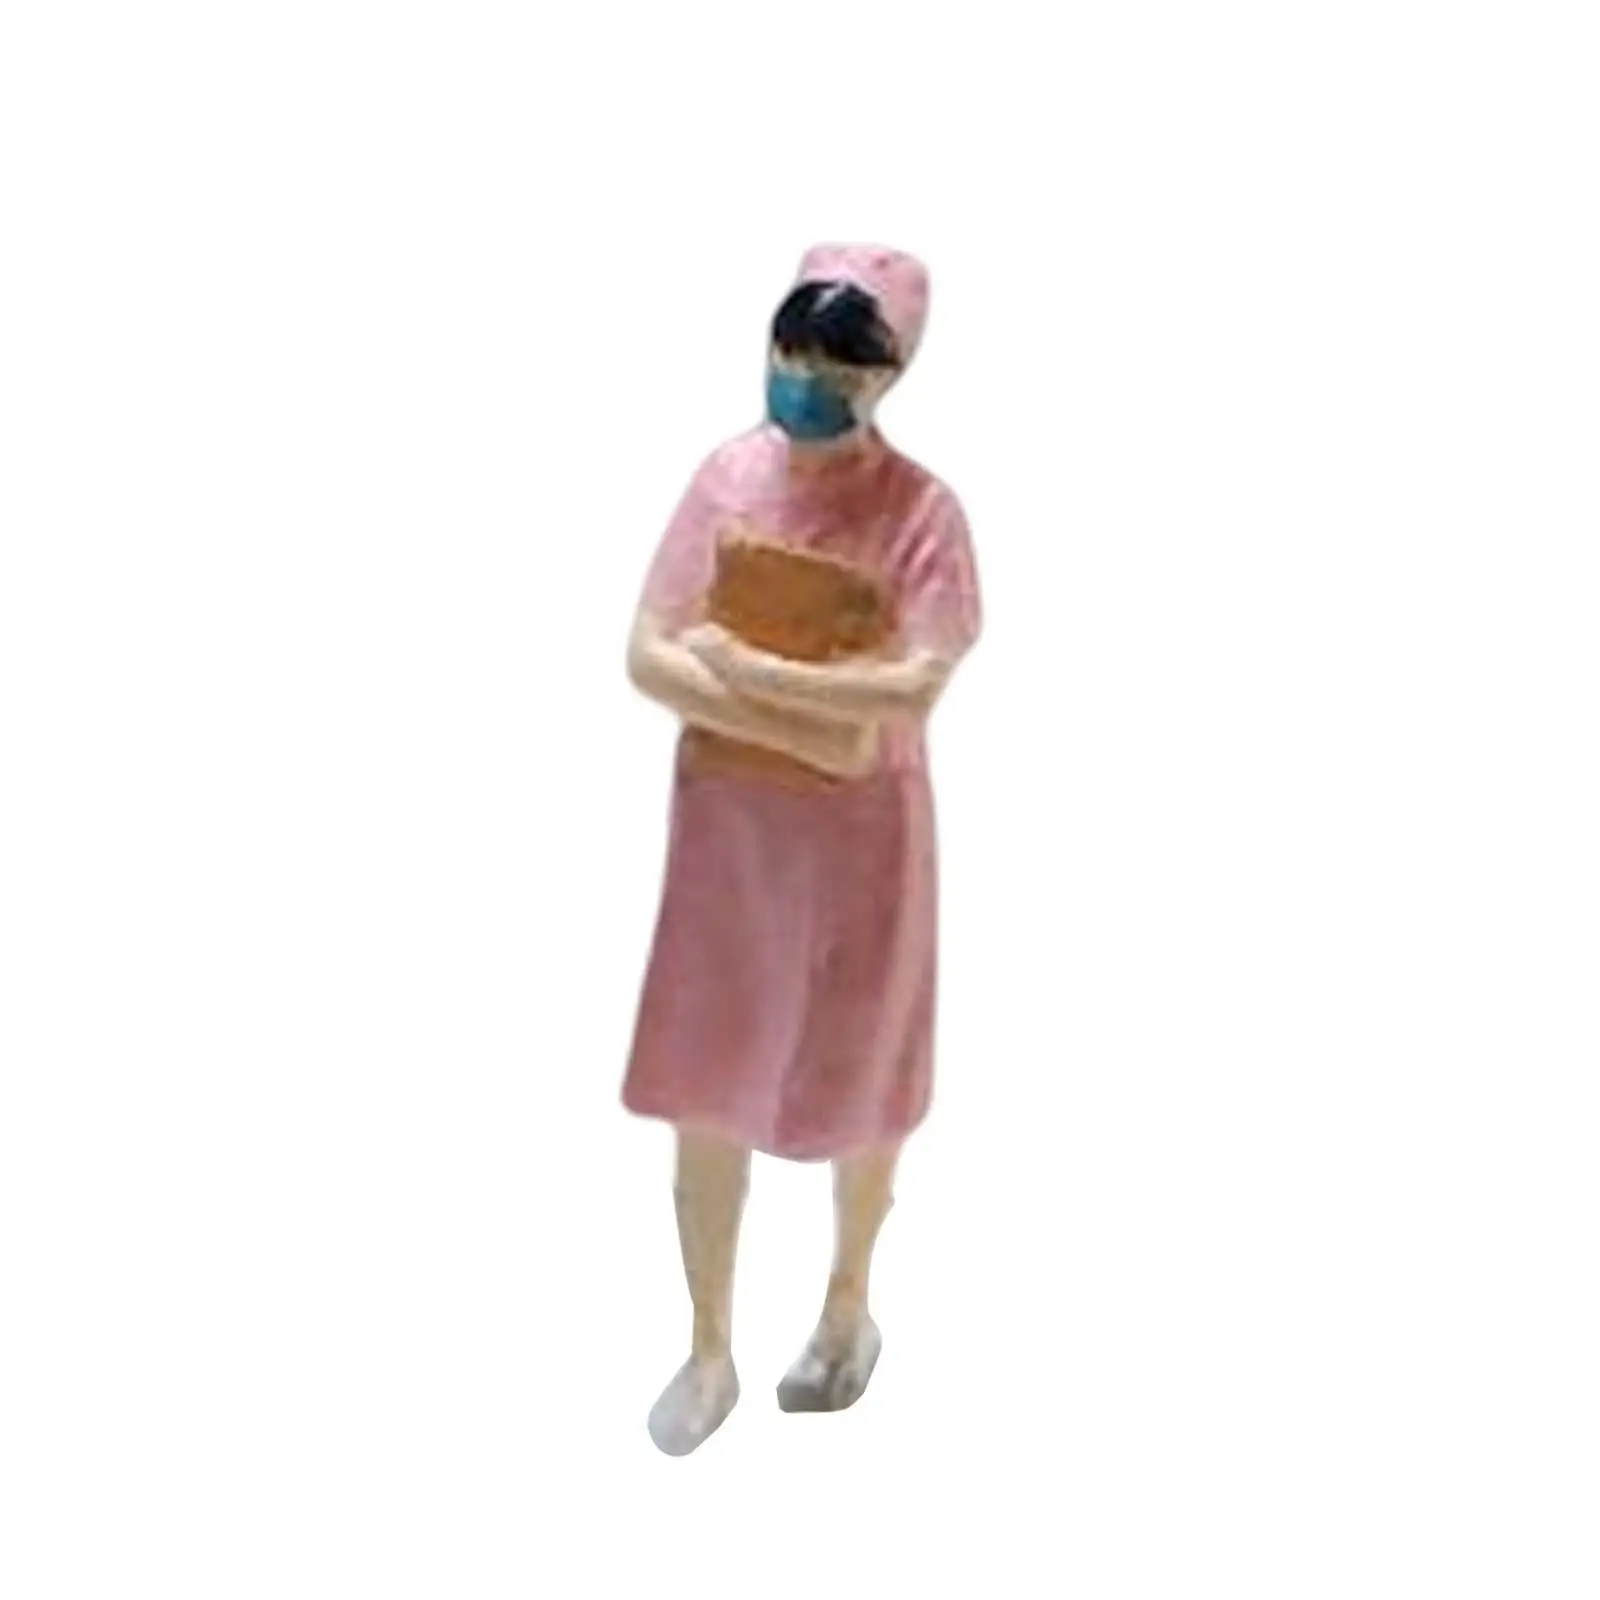 Painted 1:64 Scale People Figure Tiny Nurse Statue Railway Layout Realistic